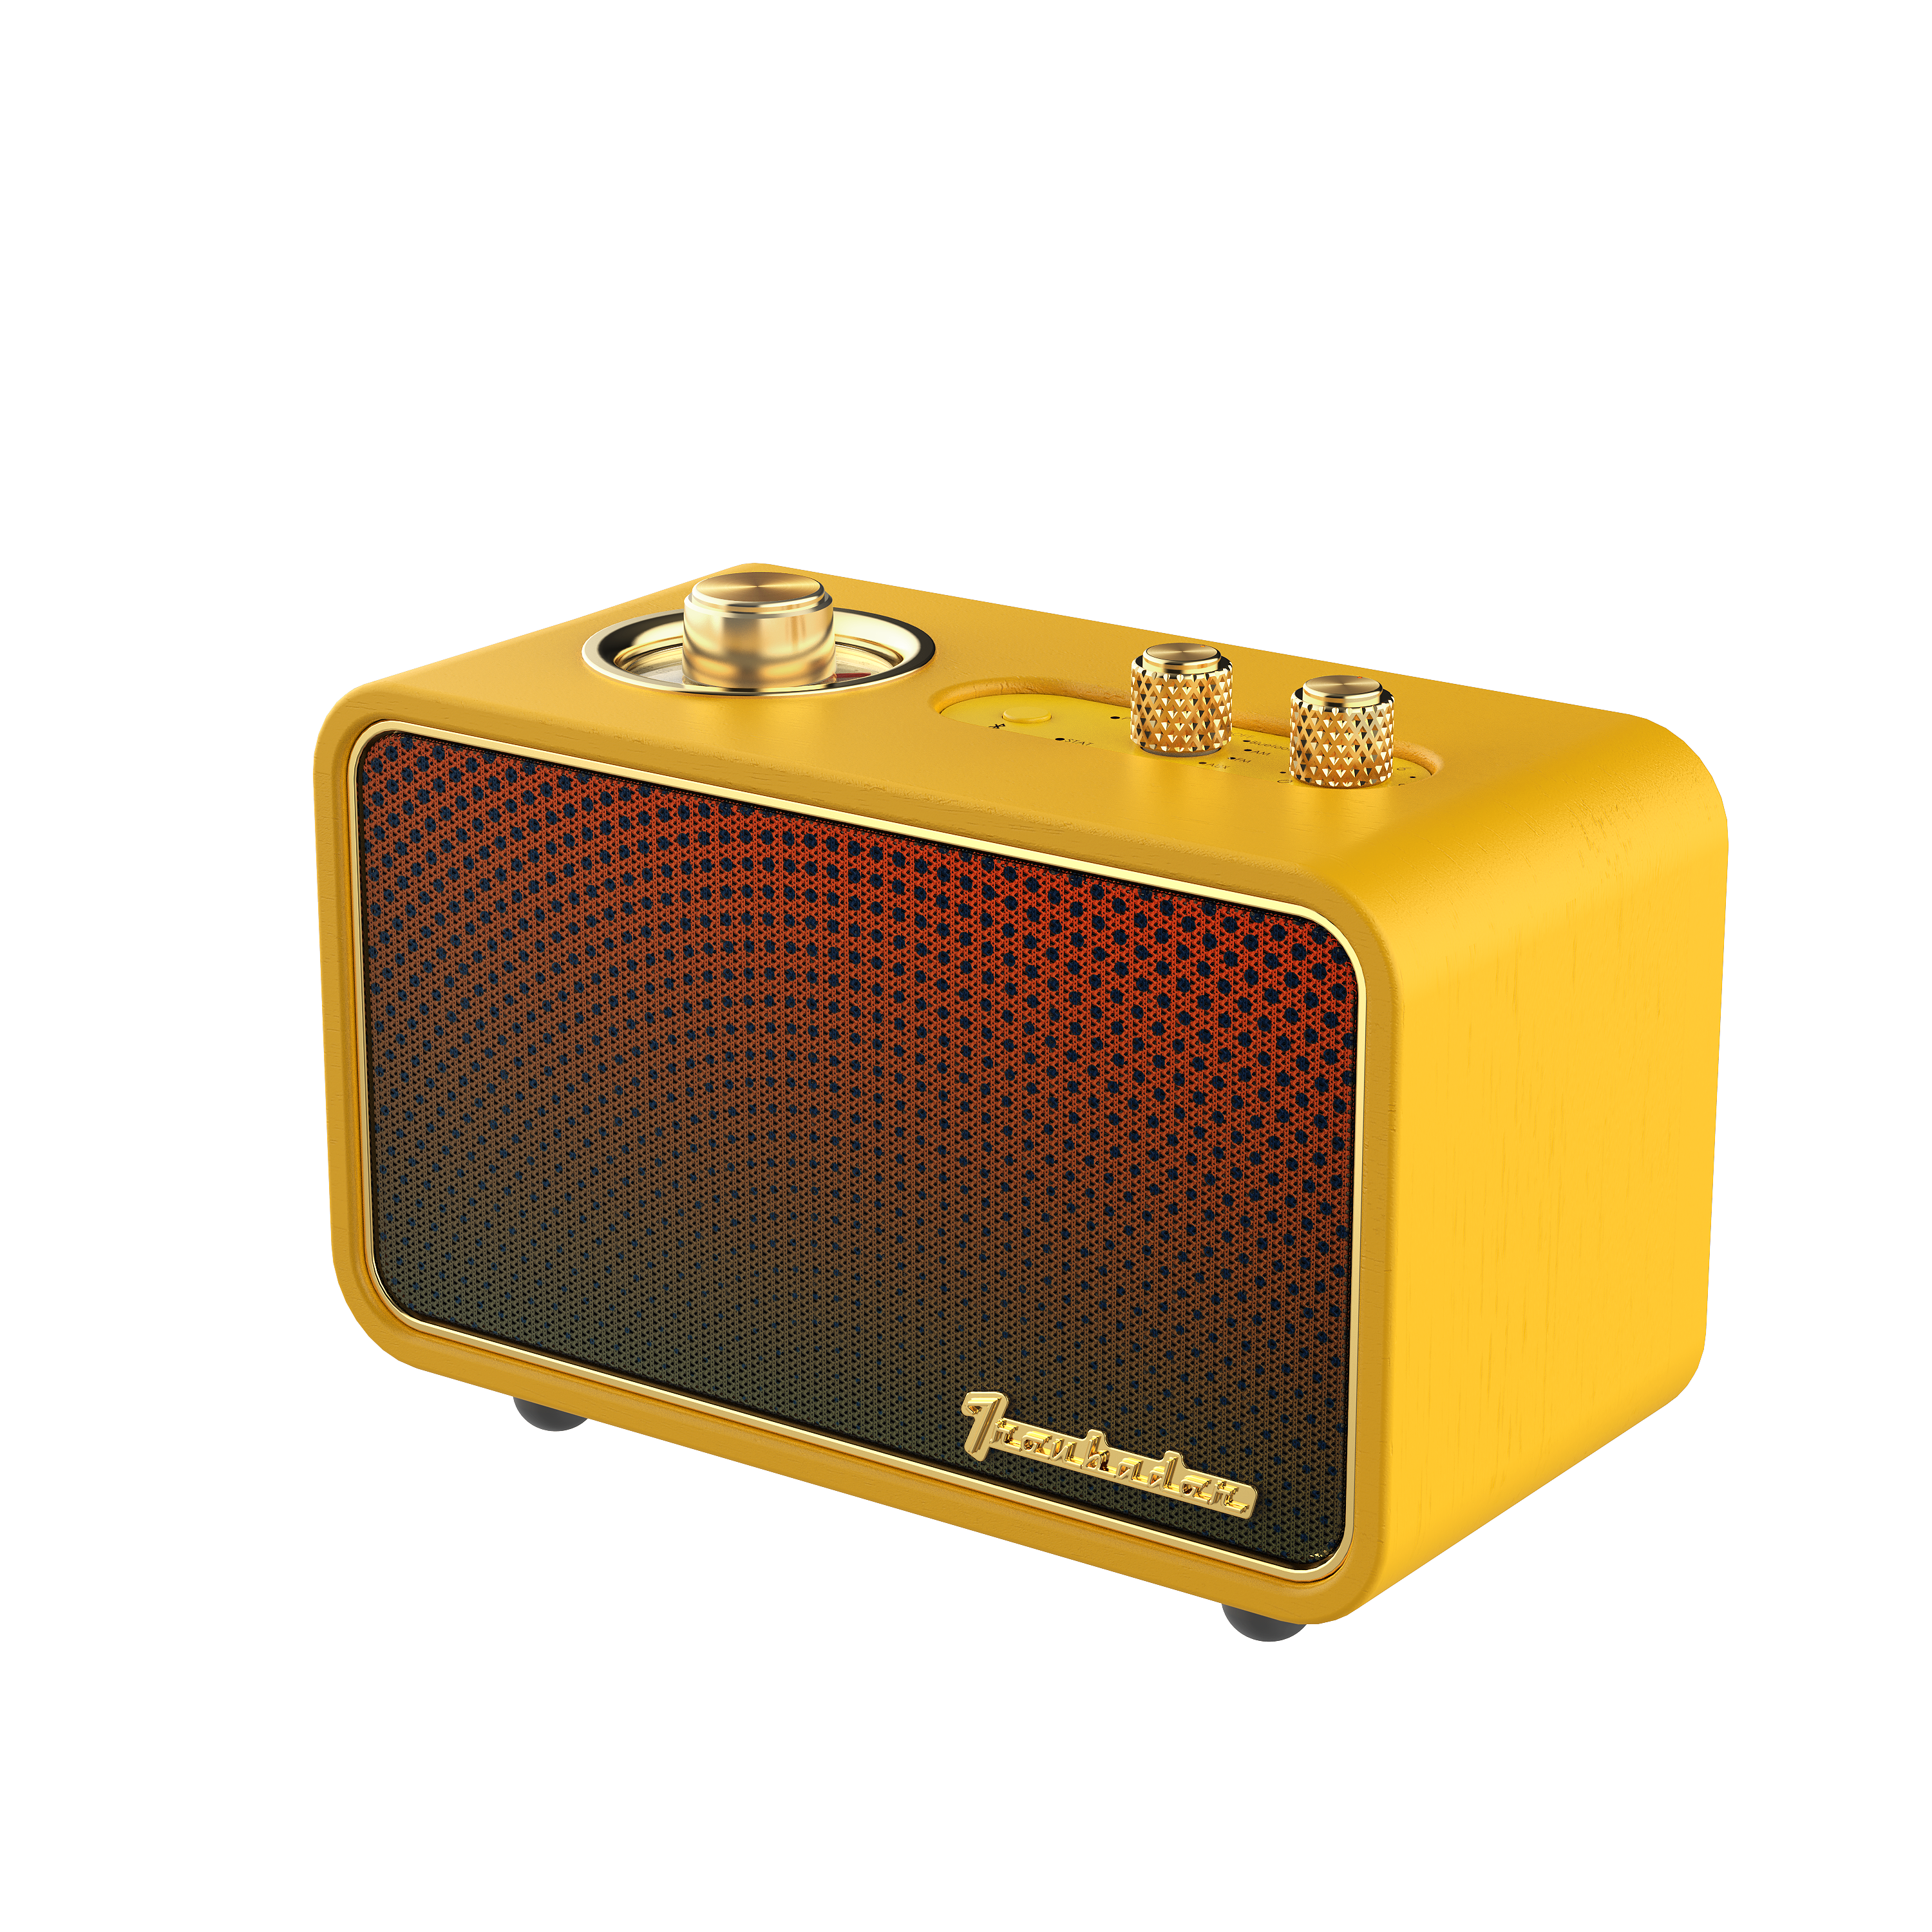 Trenbader Artlink Stereo Bluetooth Speaker with FM/AM Radio